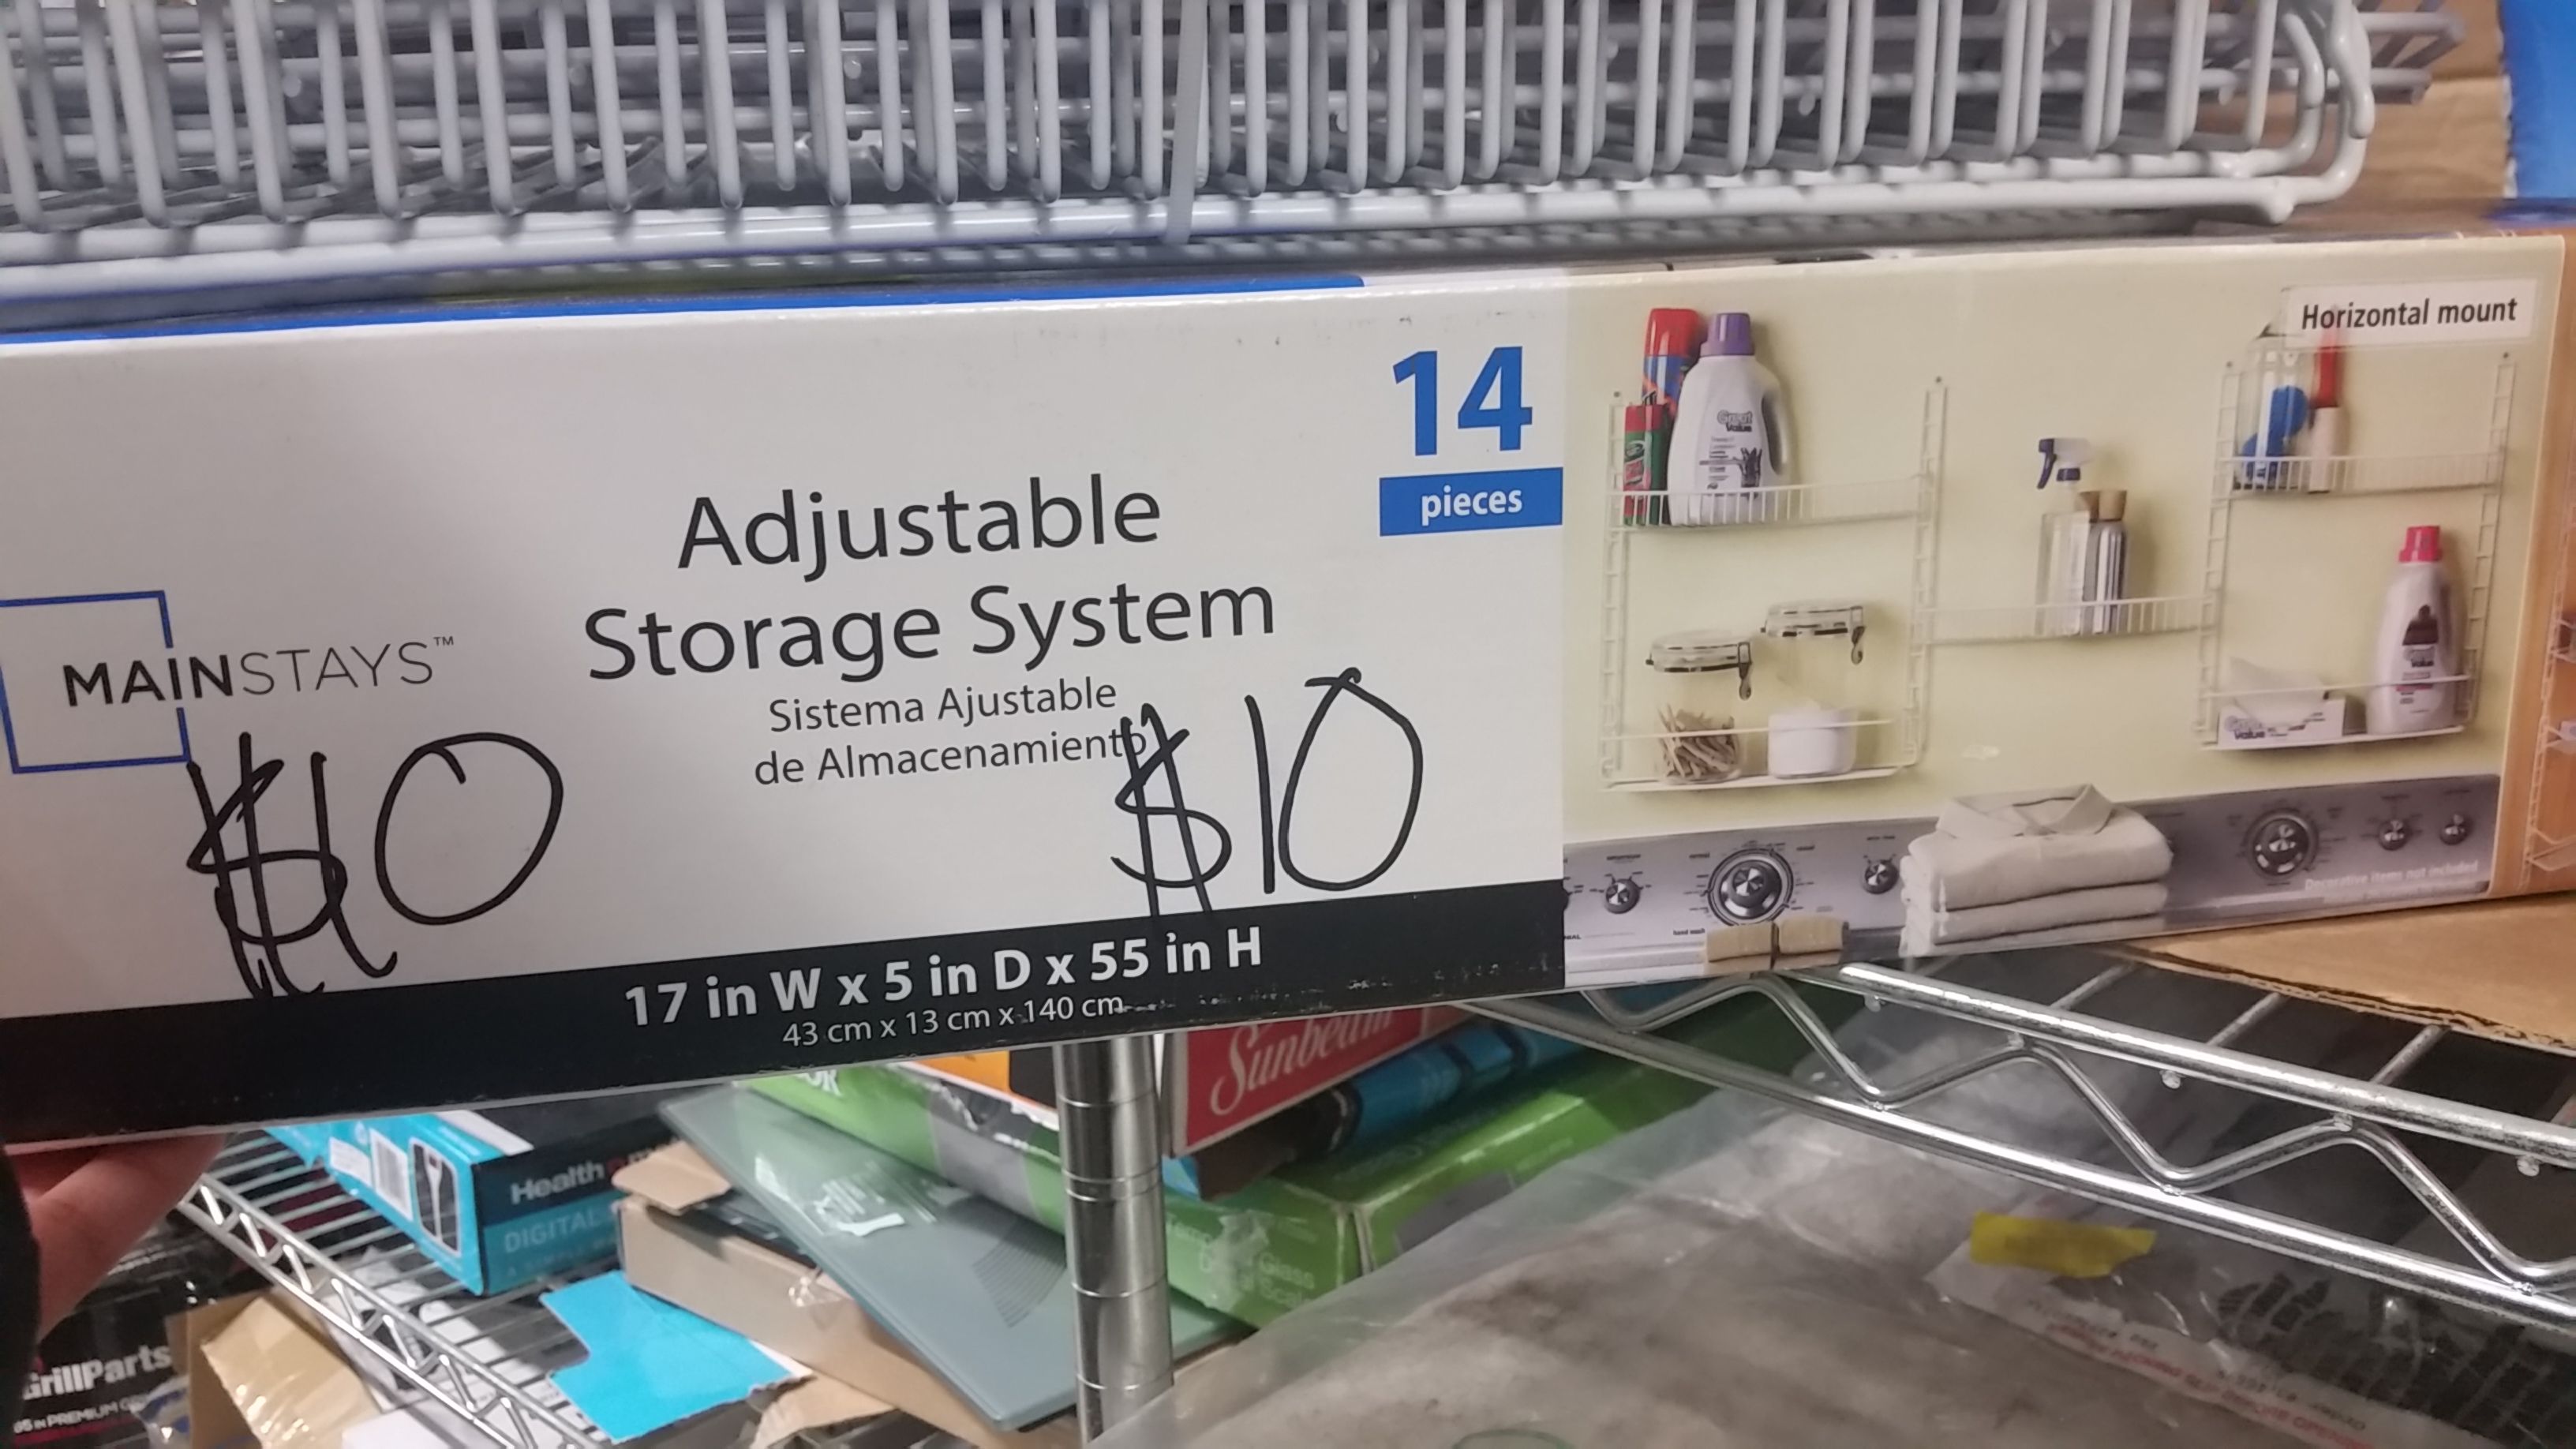 New adjustable storage system